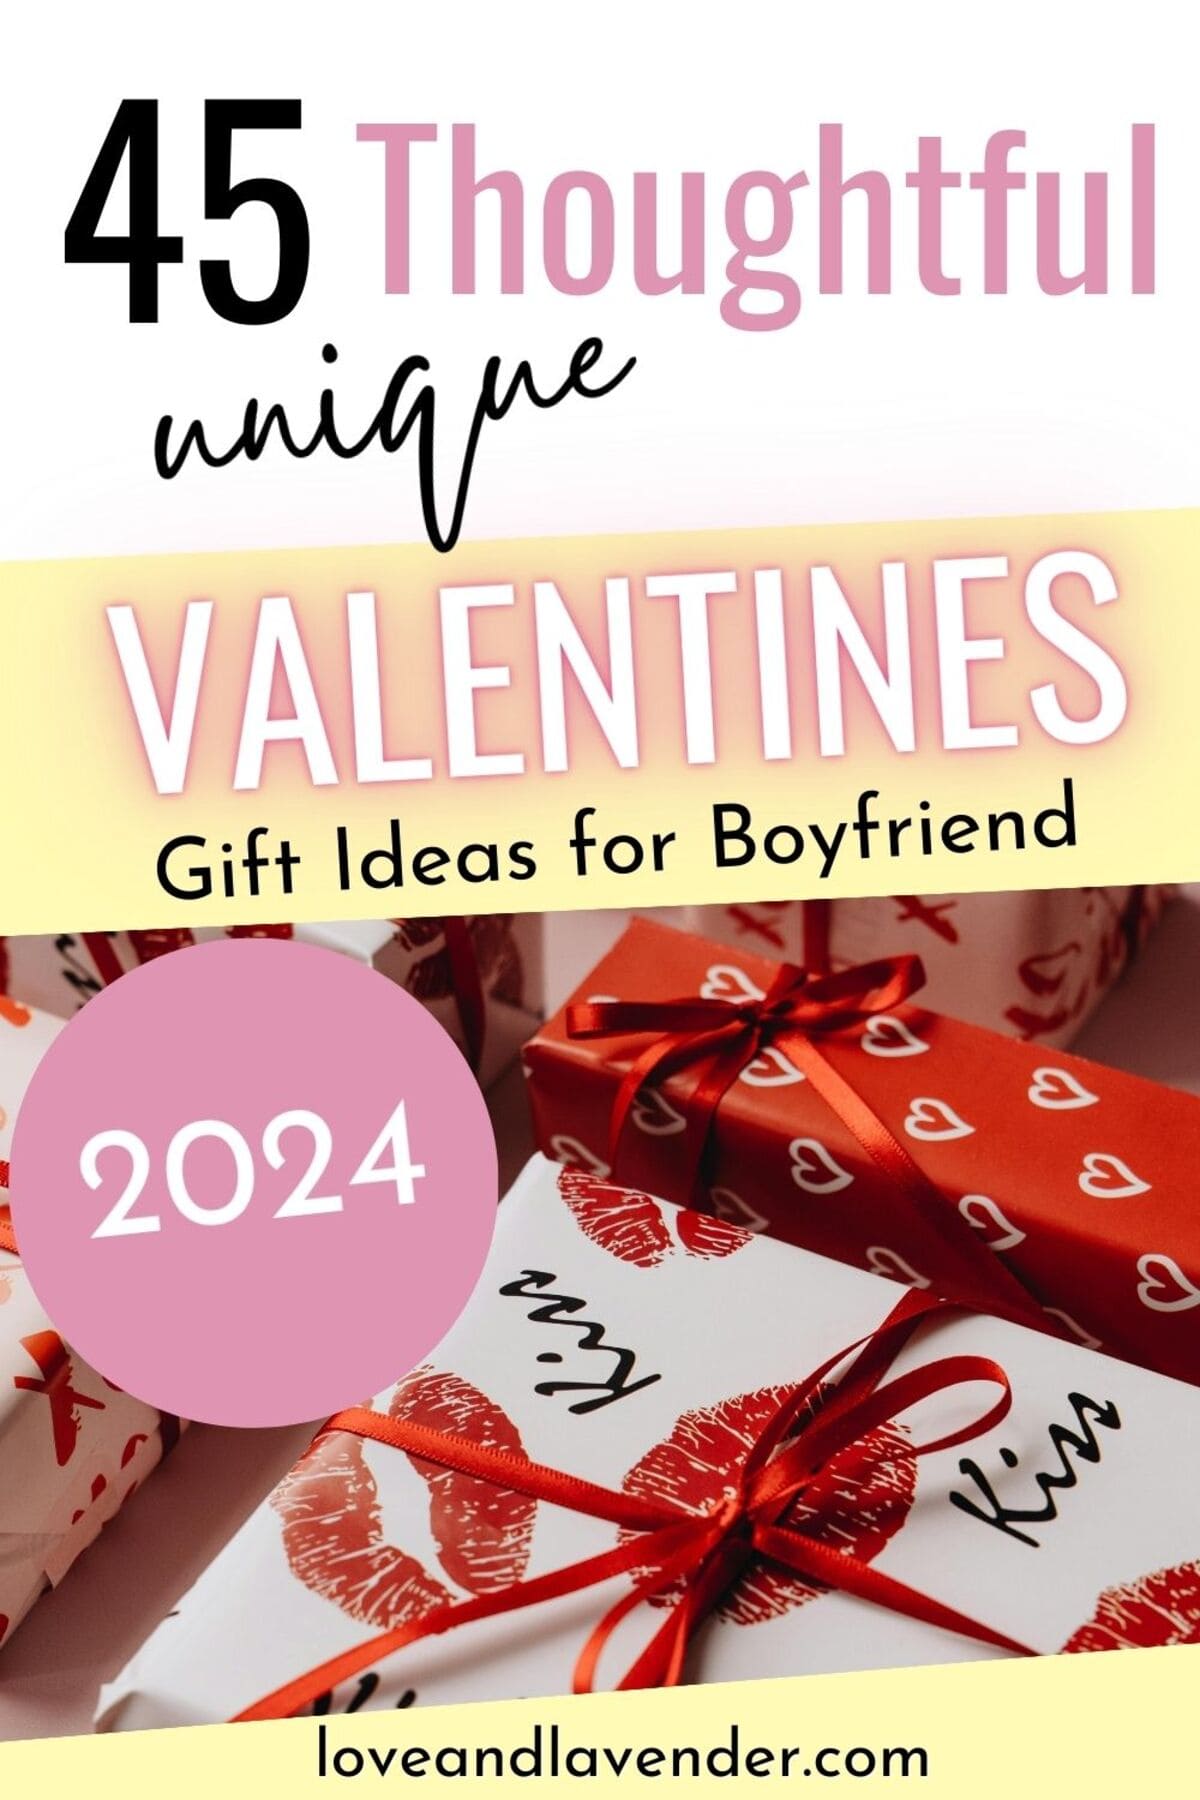 45 Thoughtful Unique Valentines Gift Ideas for Boyfriend